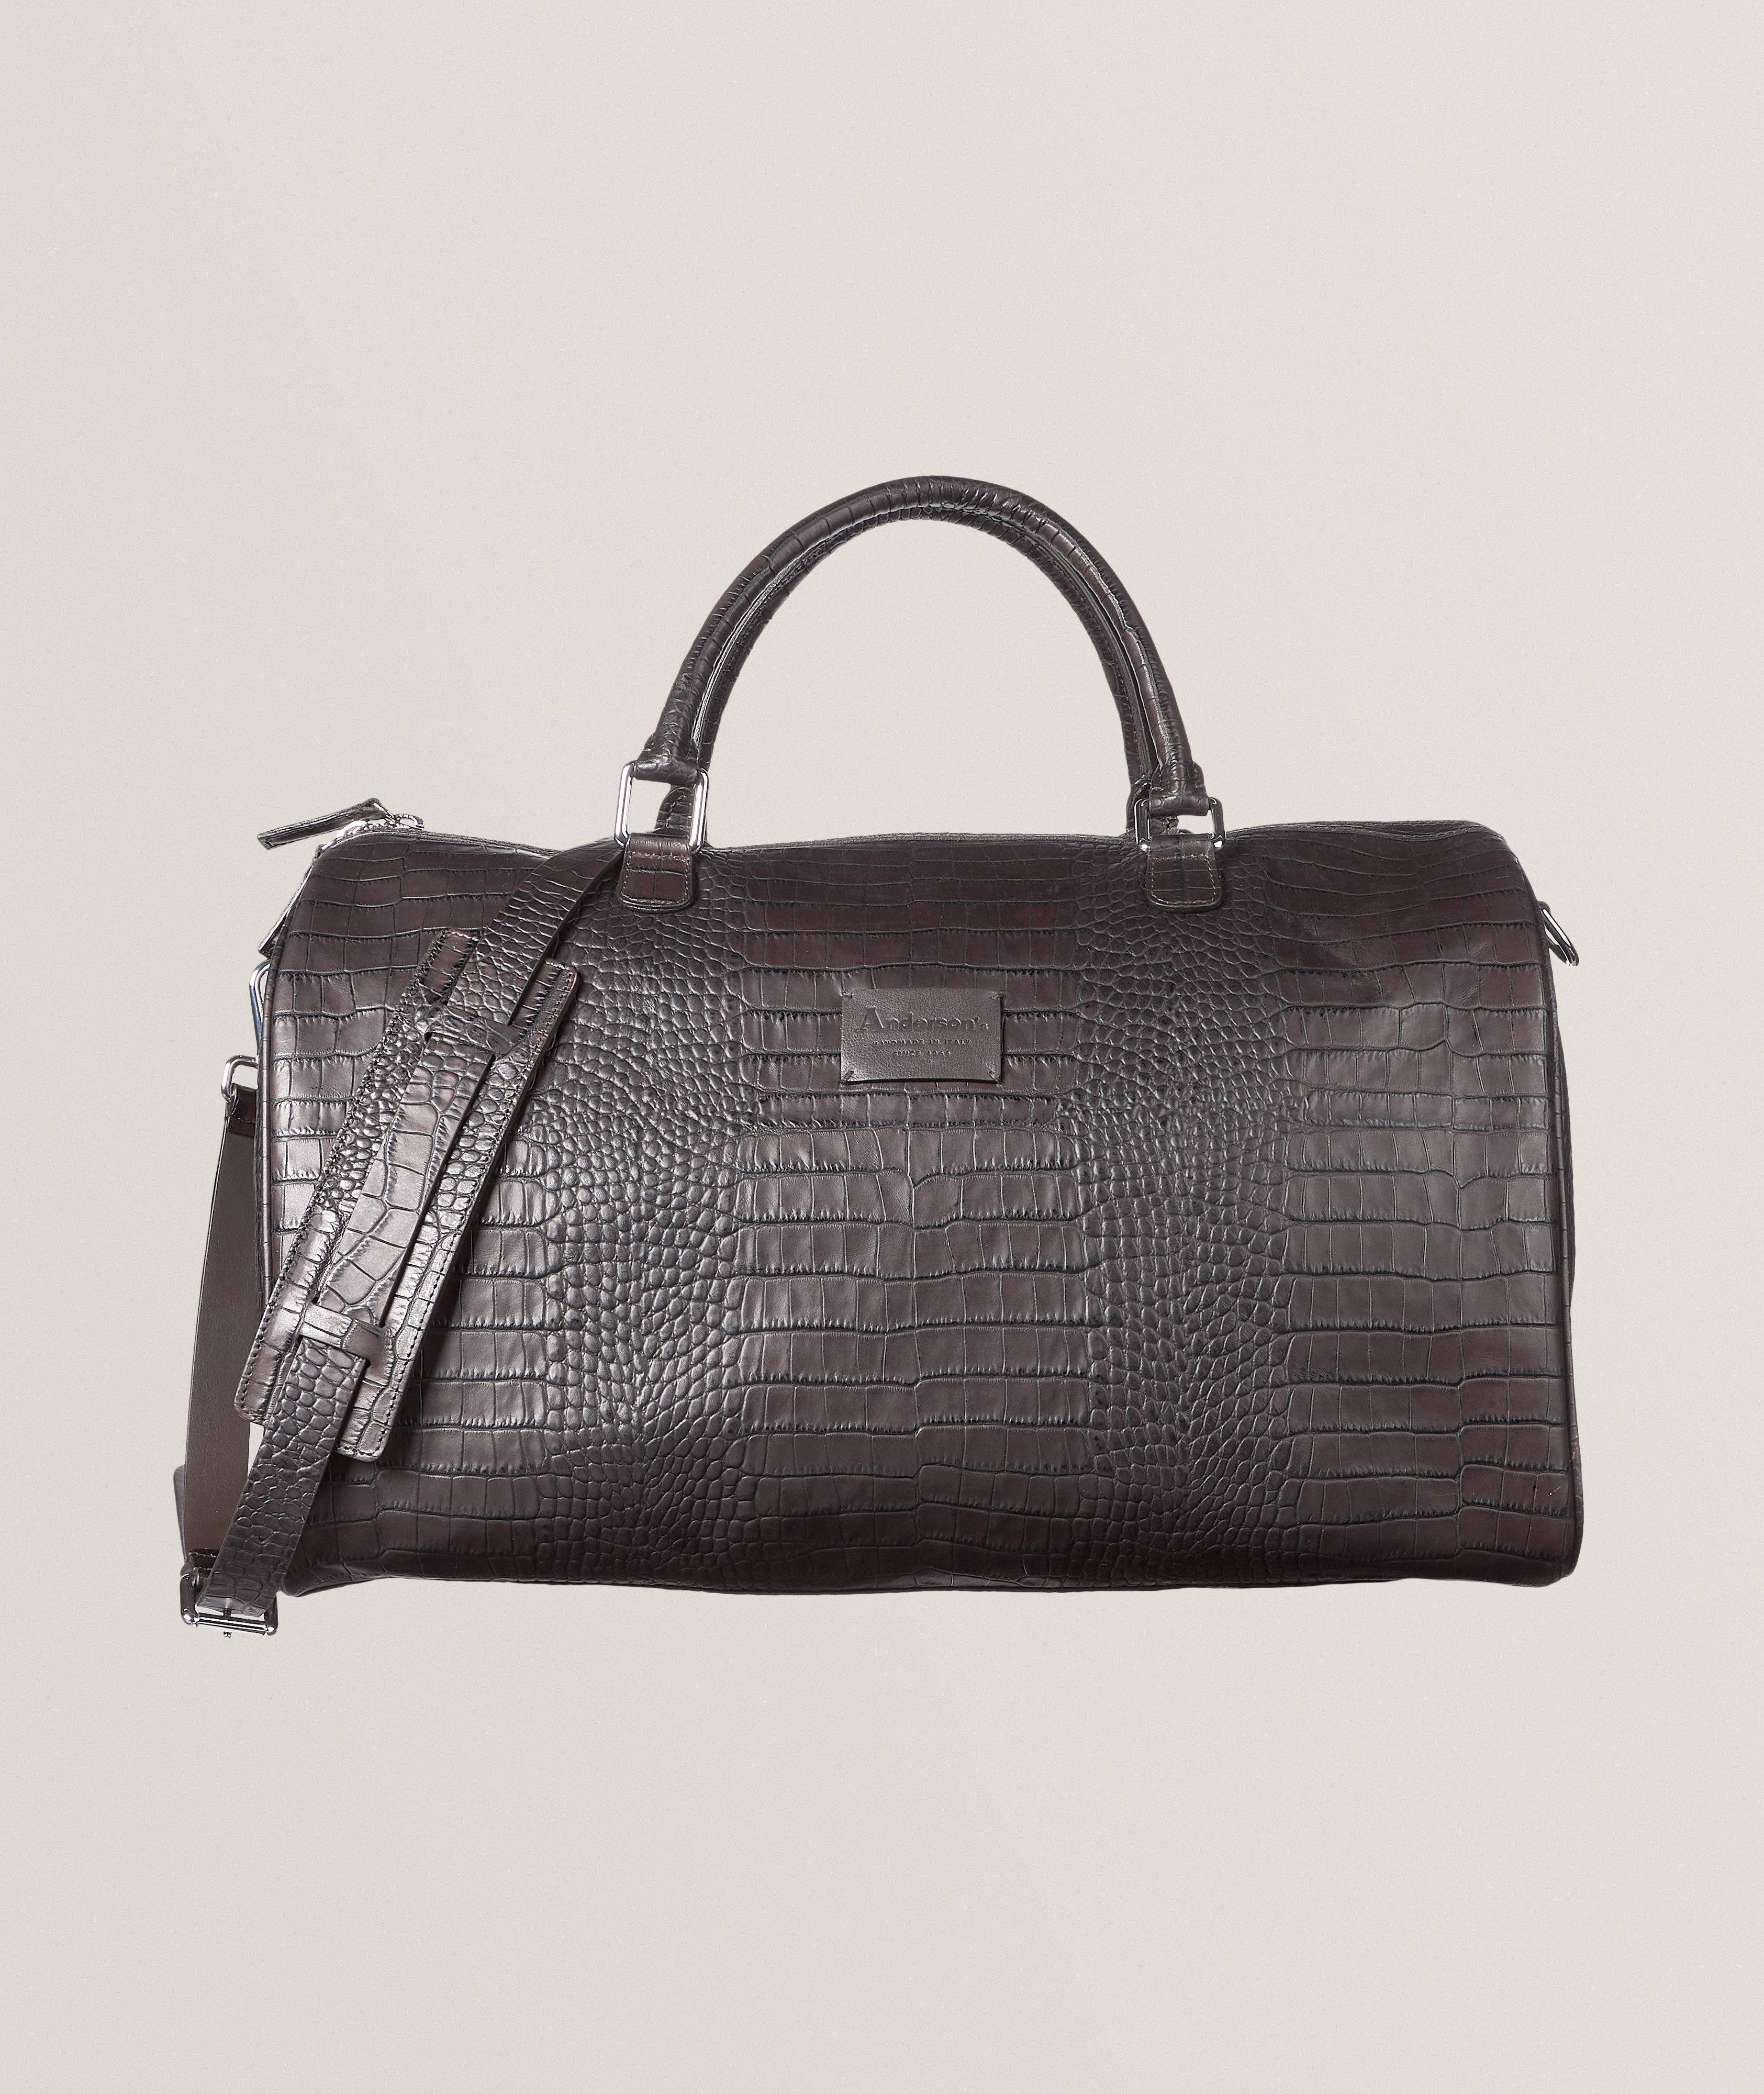 Crocodile Printed Leather Duffle Bag 